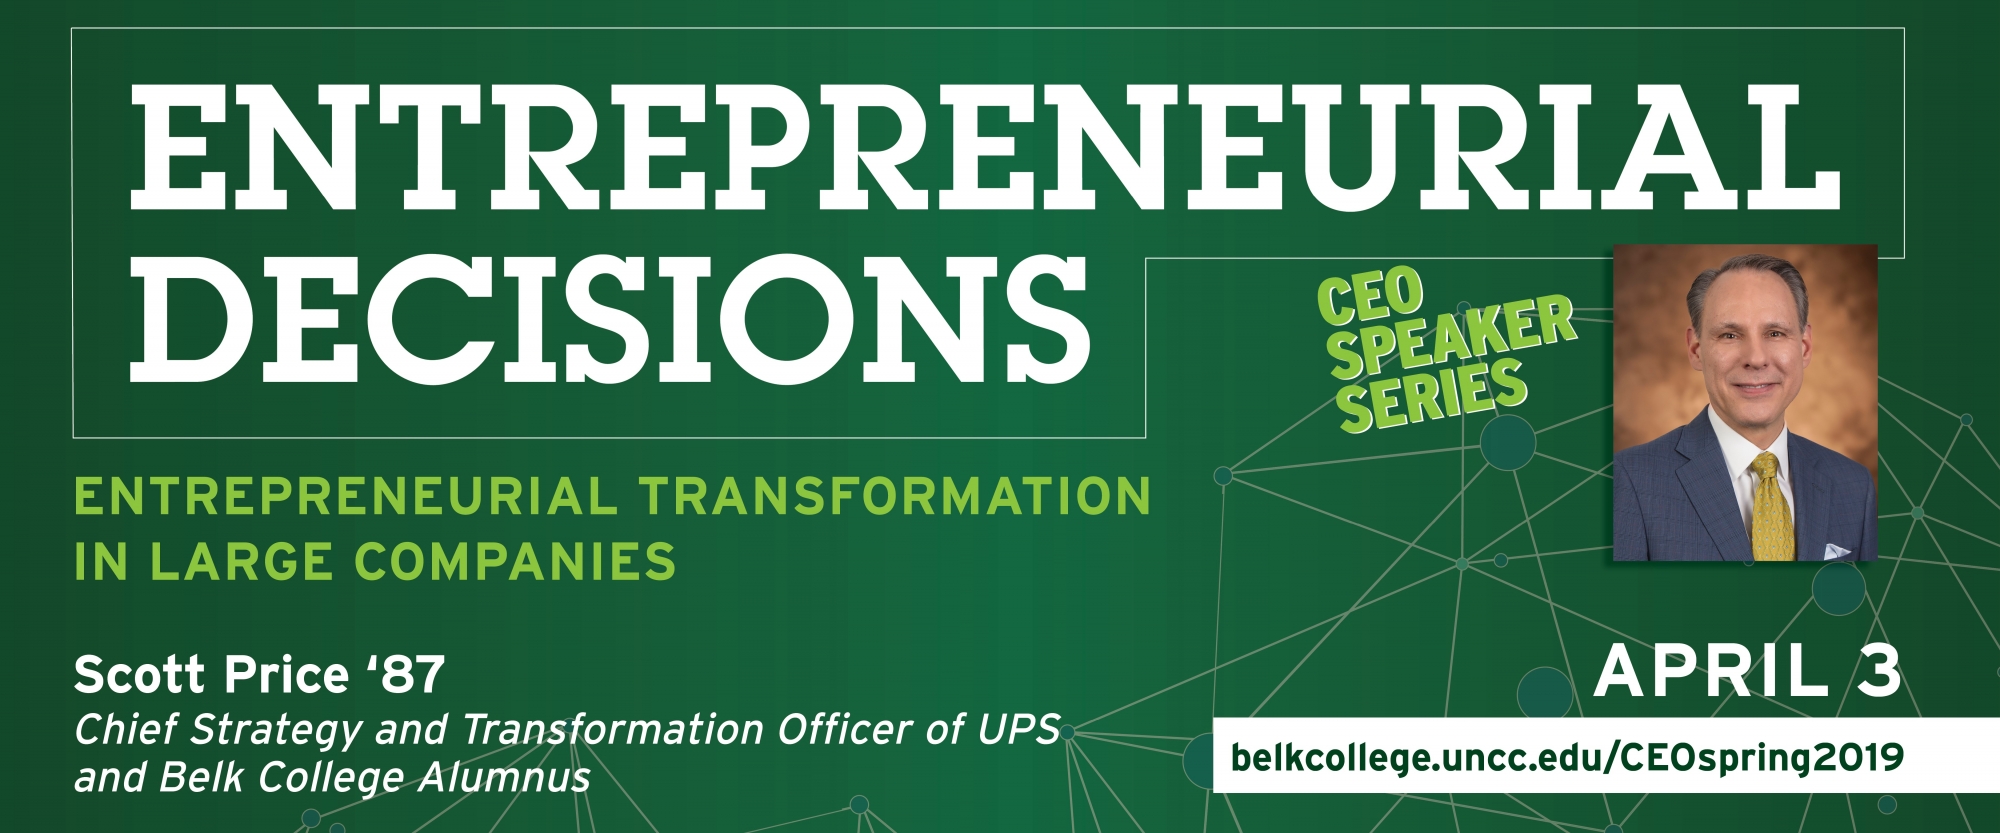 Entrepreneurial Decisions graphic April 3